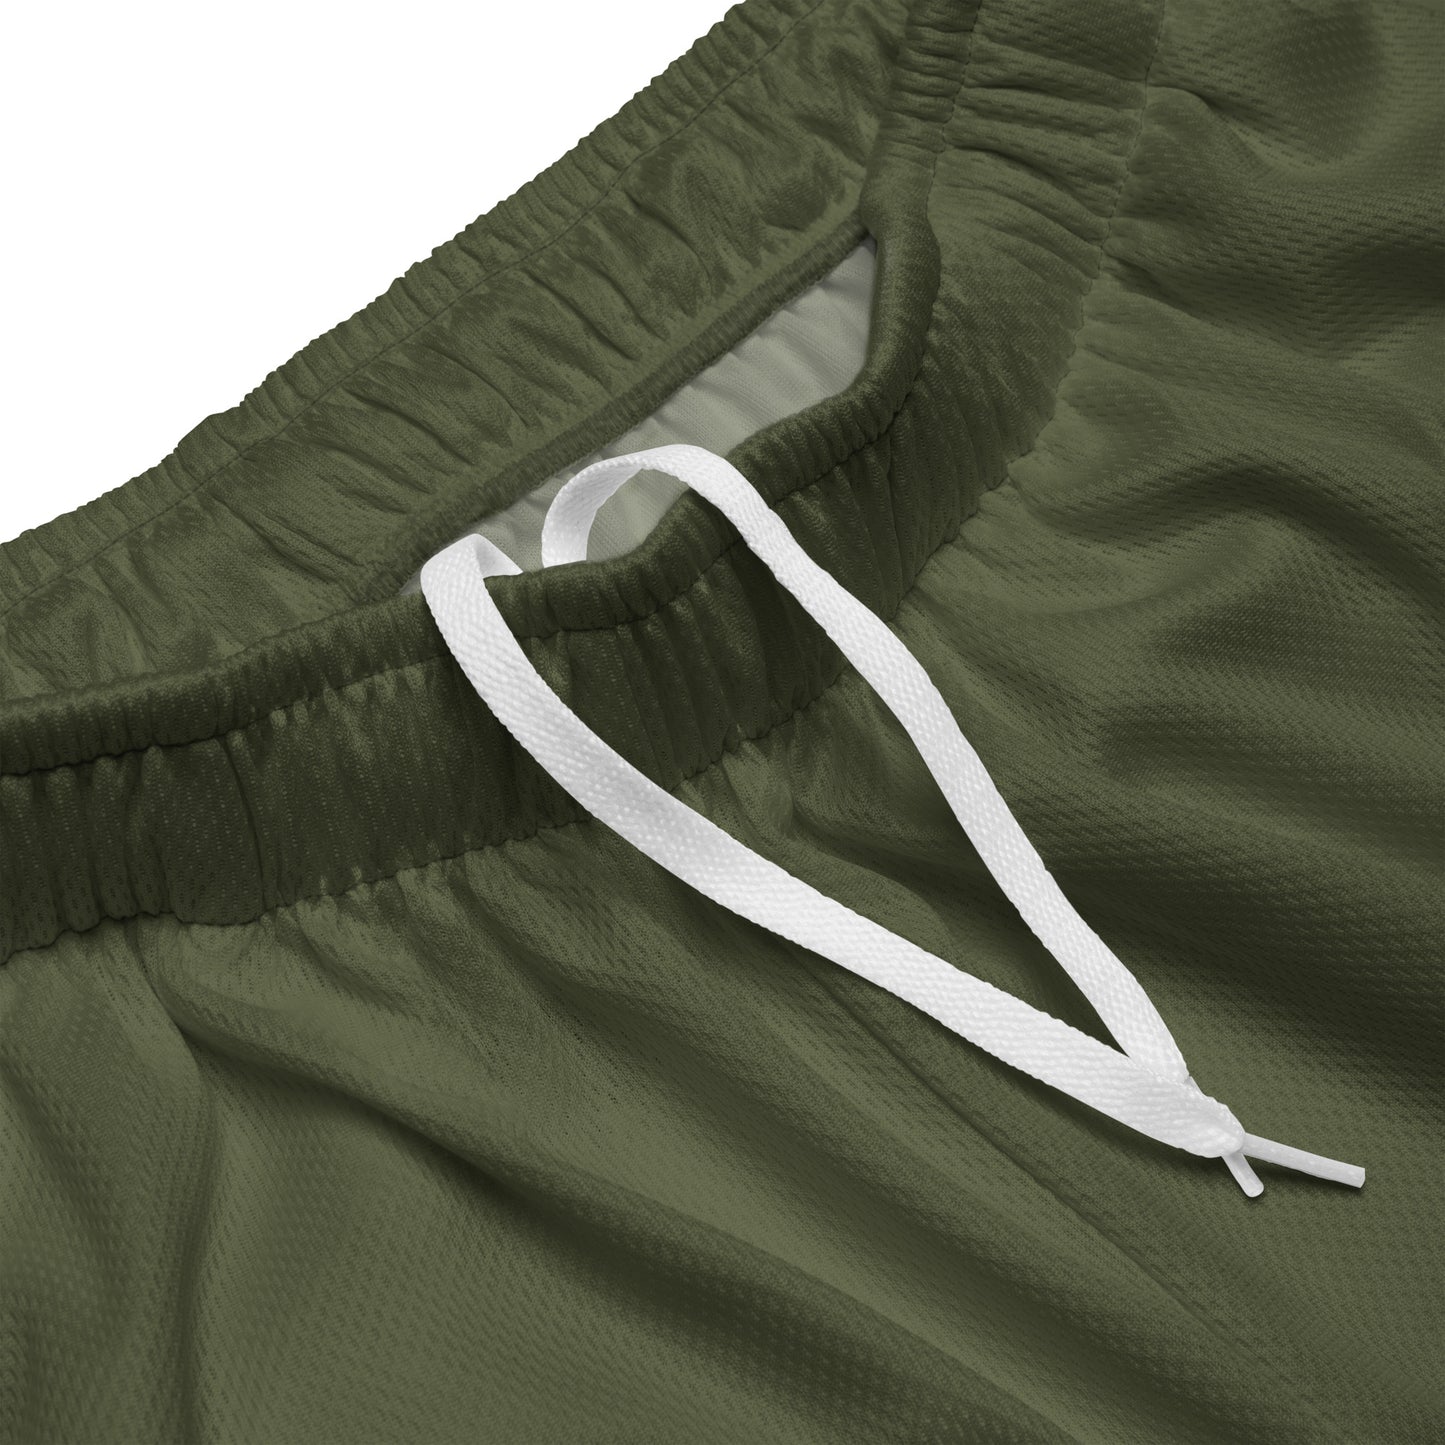 DeepSea Locker Athlete Unisex mesh shorts